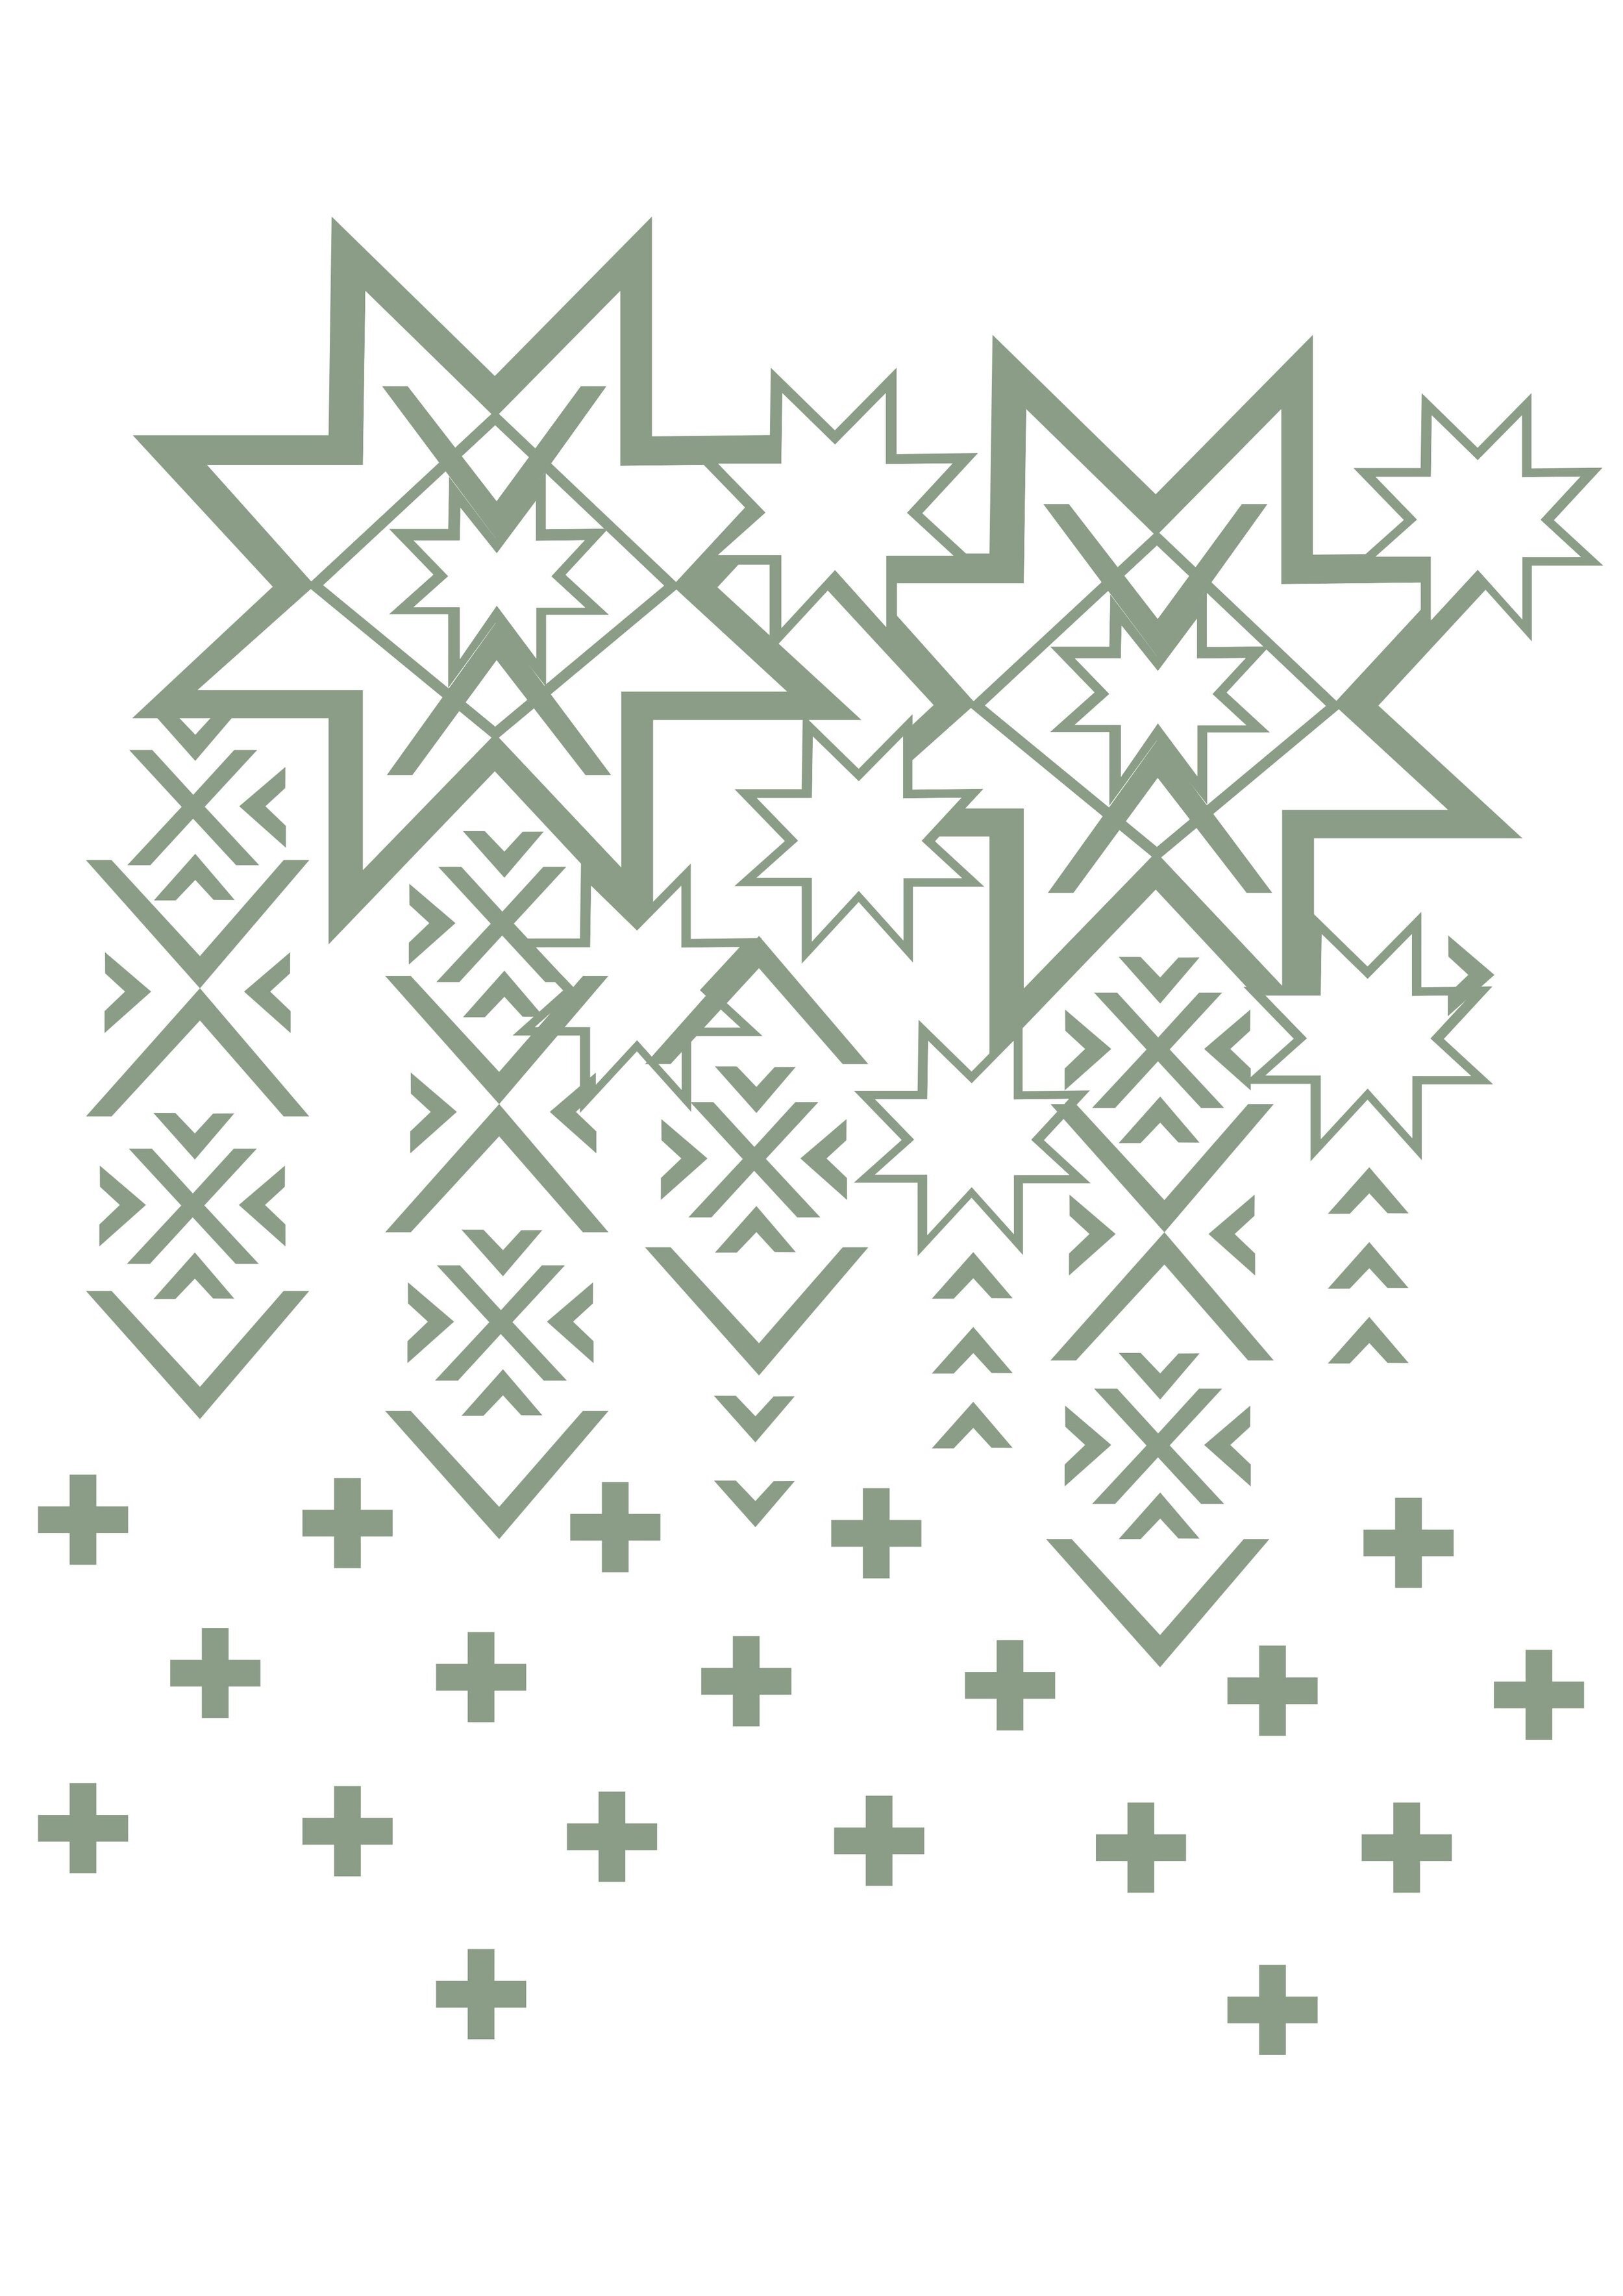 Illustrator file of more finalized pattern